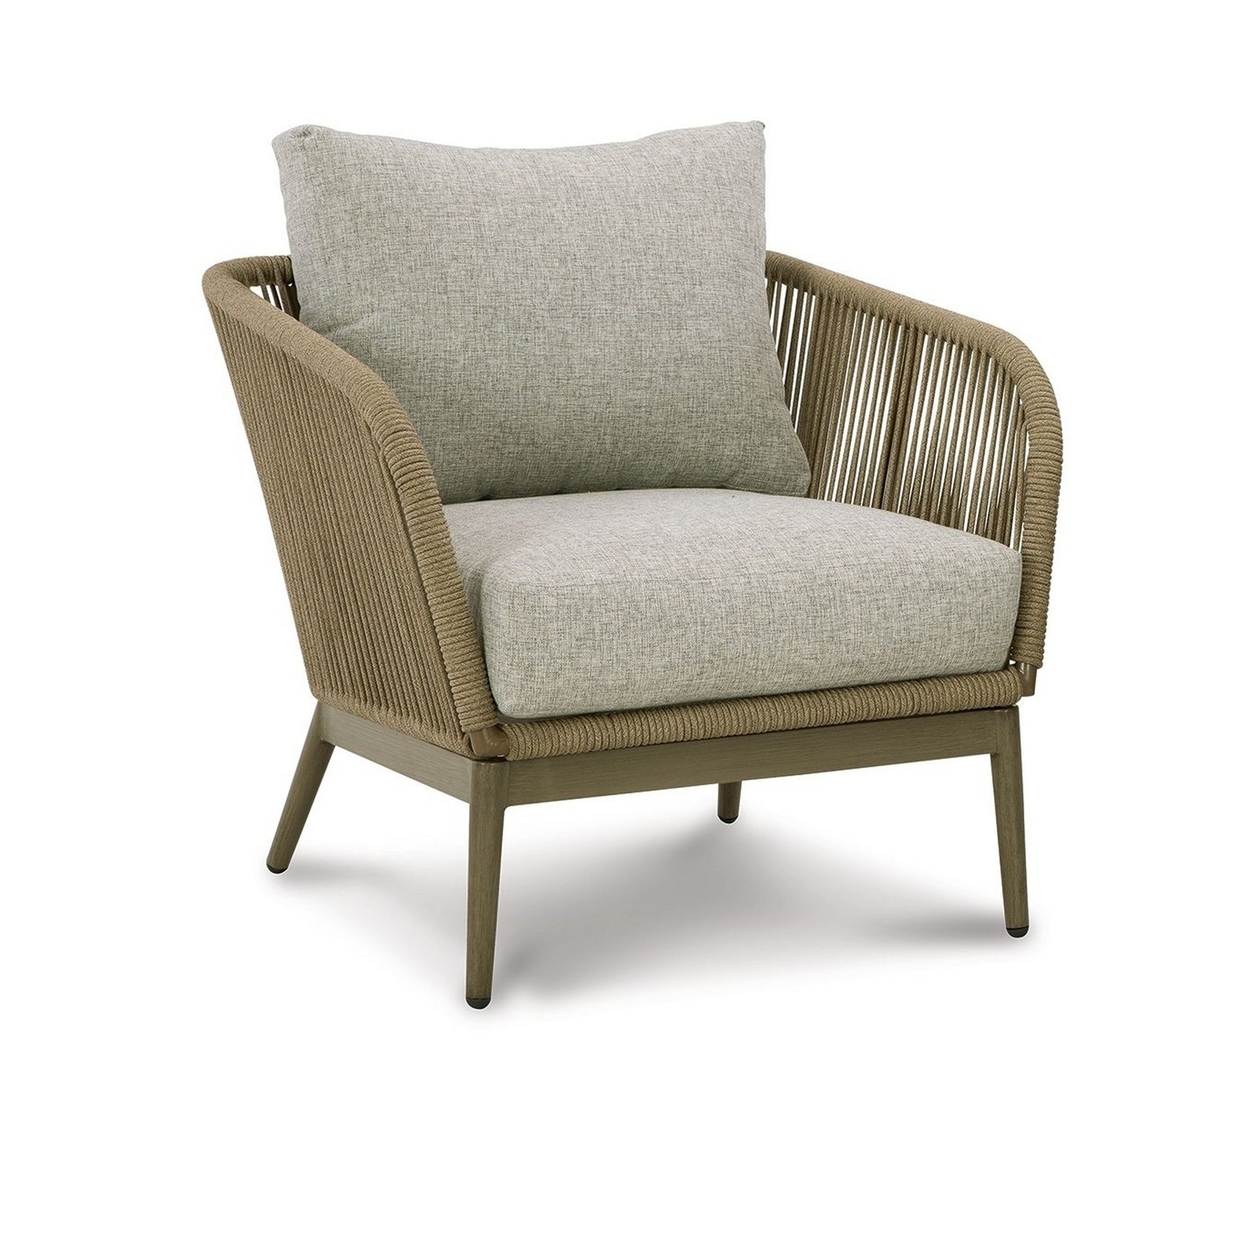 Sven 34 Inch Outdoor Lounge Chair Set Of 2, Cushions, Rope, Aluminum, Brown - Saltoro Sherpi